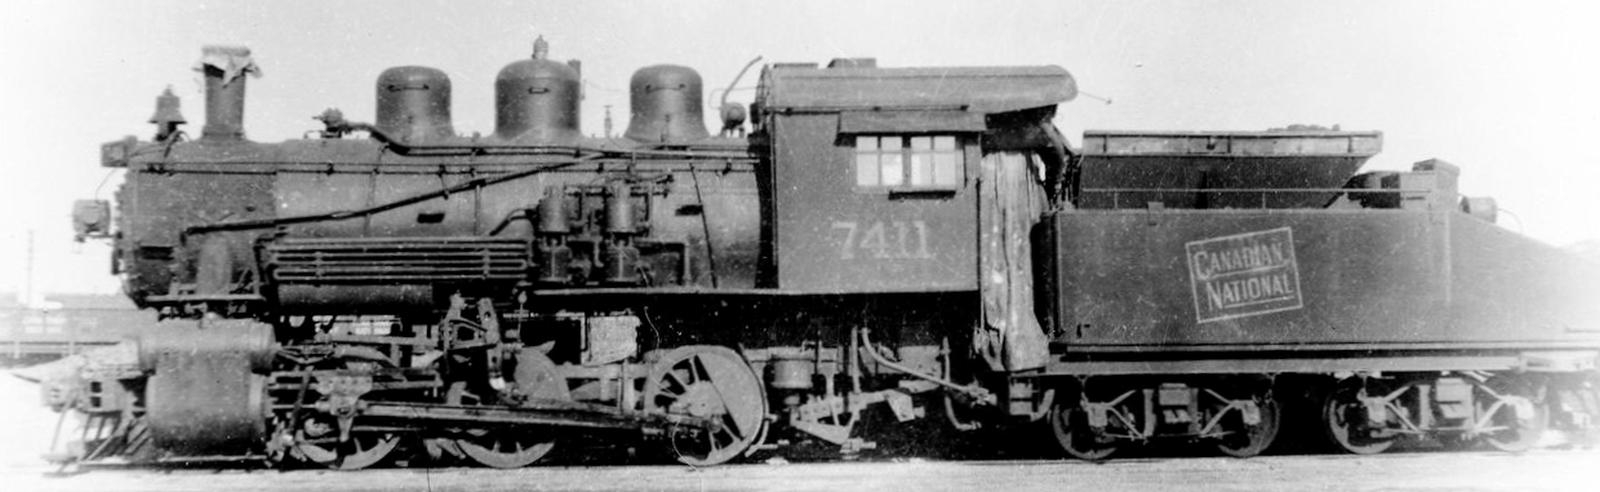 No. 7411 in May 1954 in Saskatoon